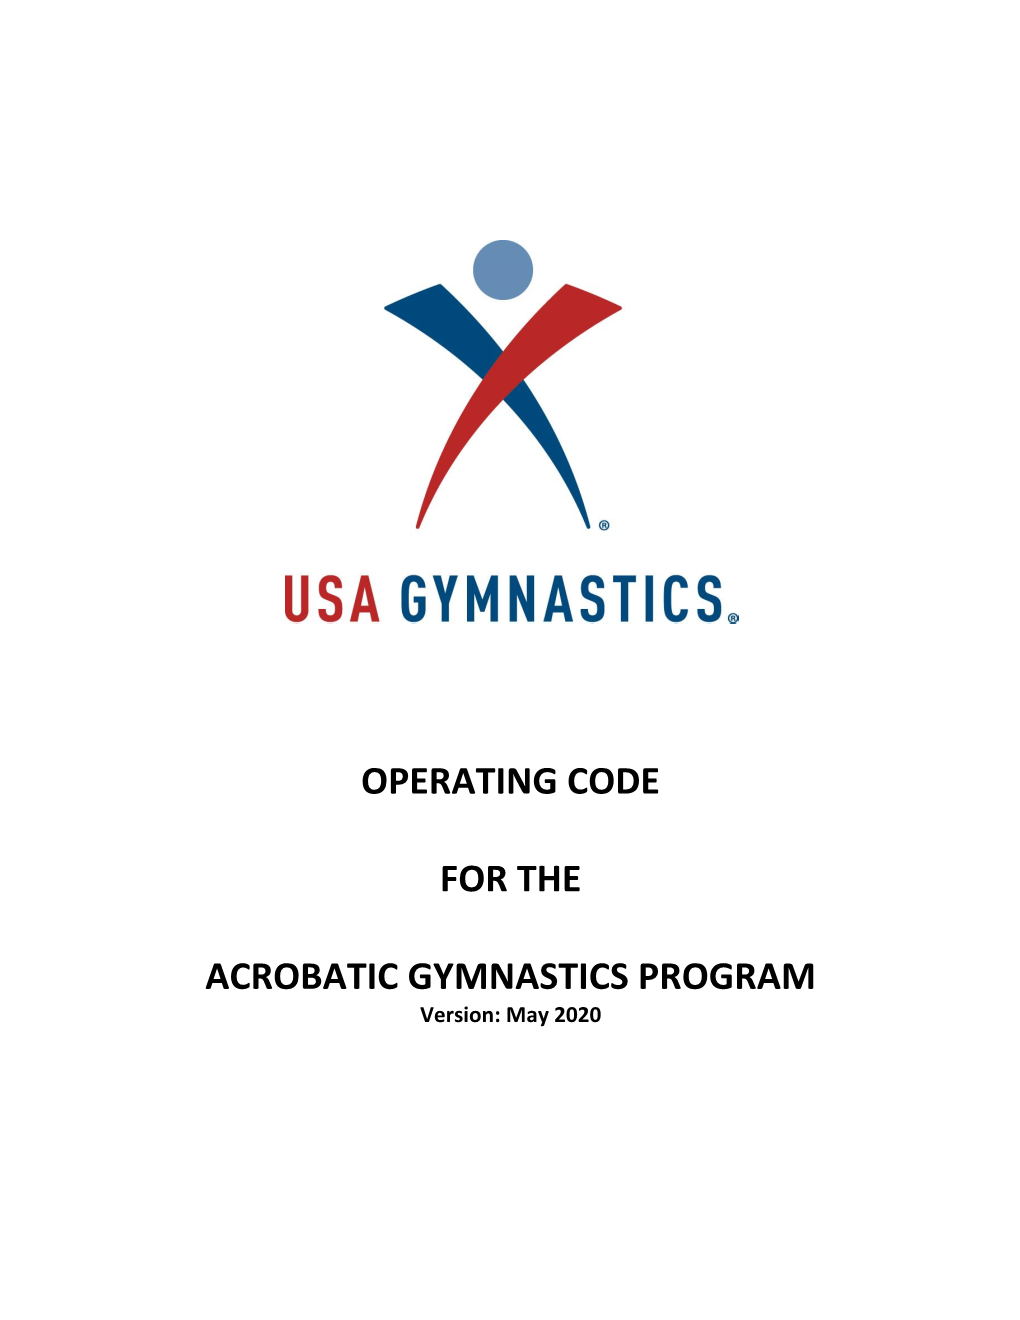 Operating Code for the Acrobatic Gymnastics Program